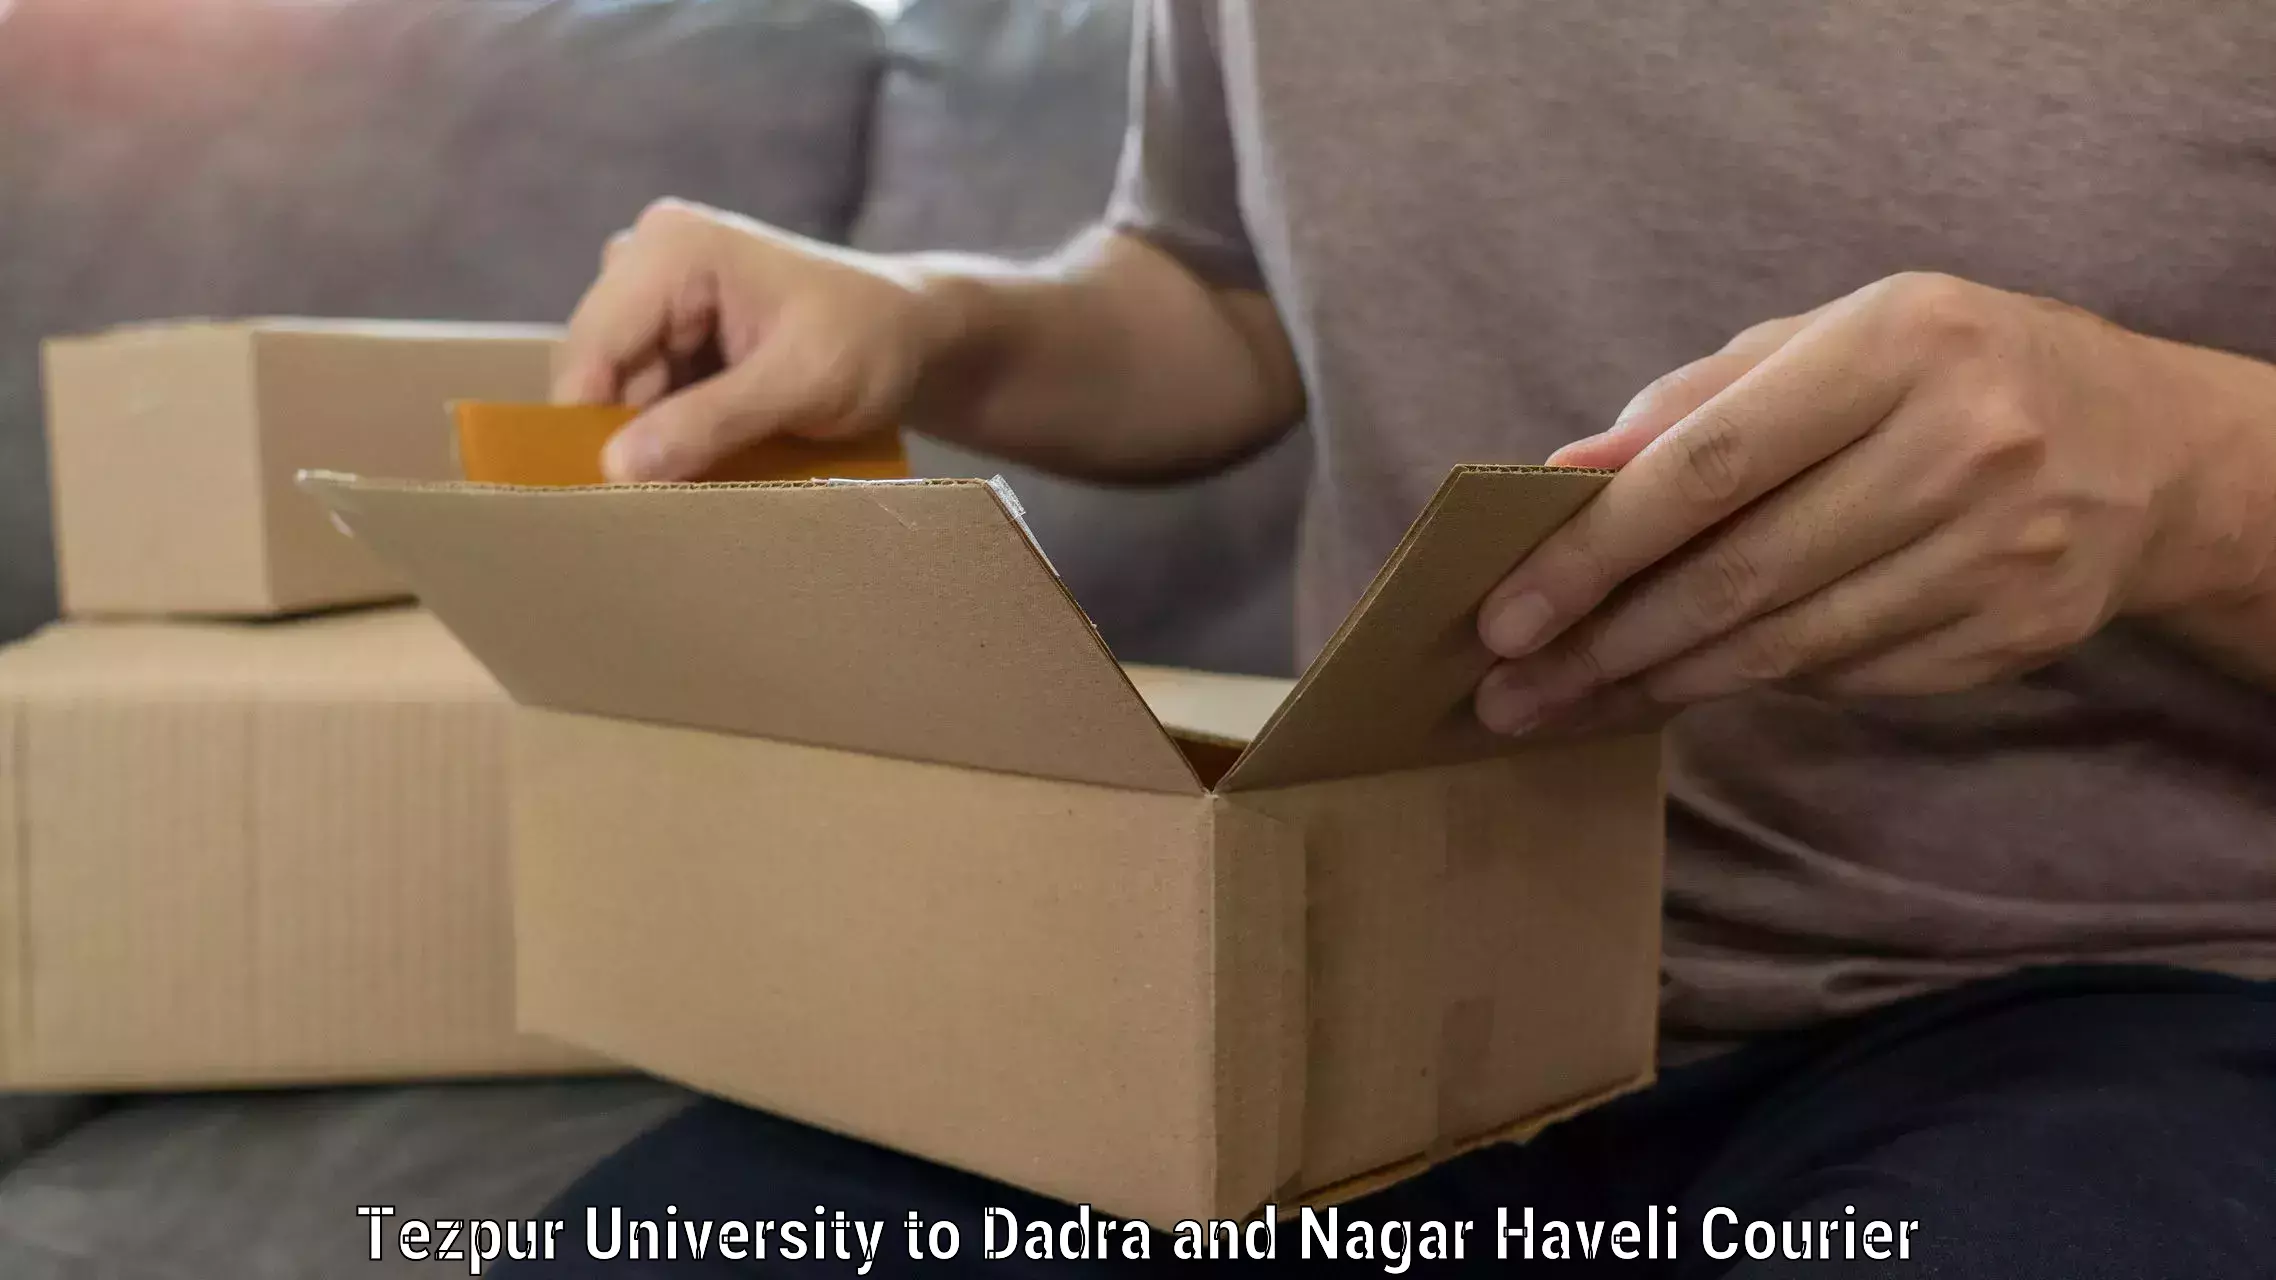 Skilled furniture movers Tezpur University to Dadra and Nagar Haveli